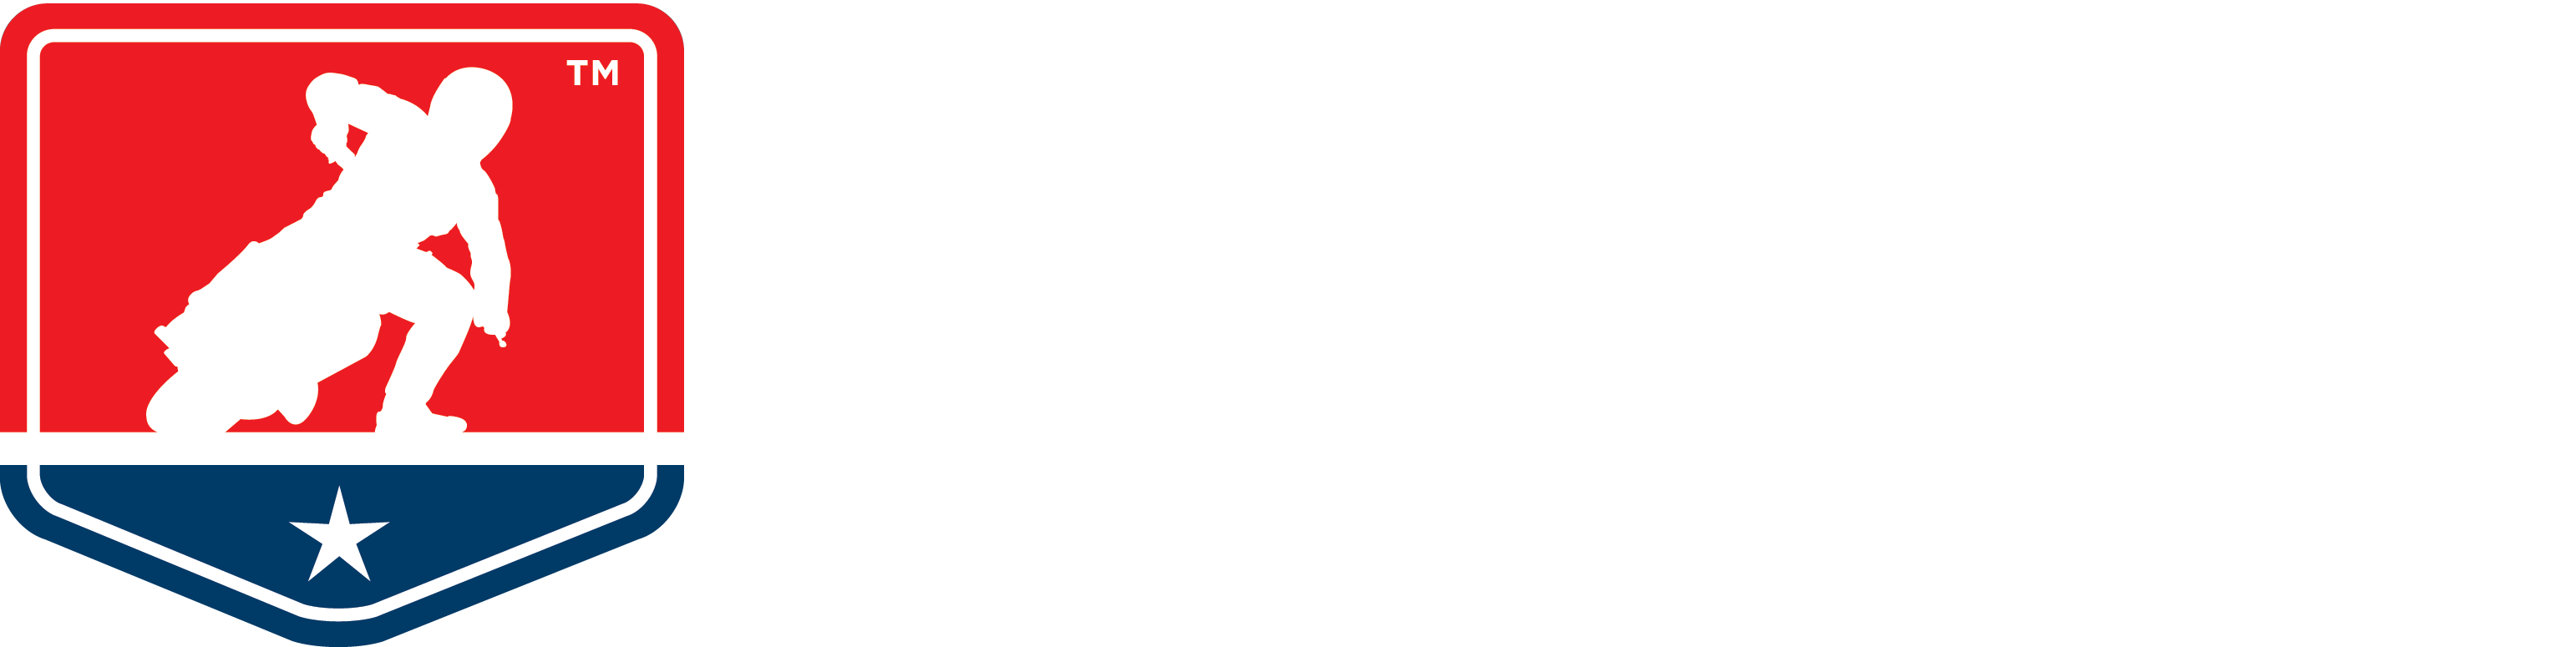 AMA Flat Track vector logo